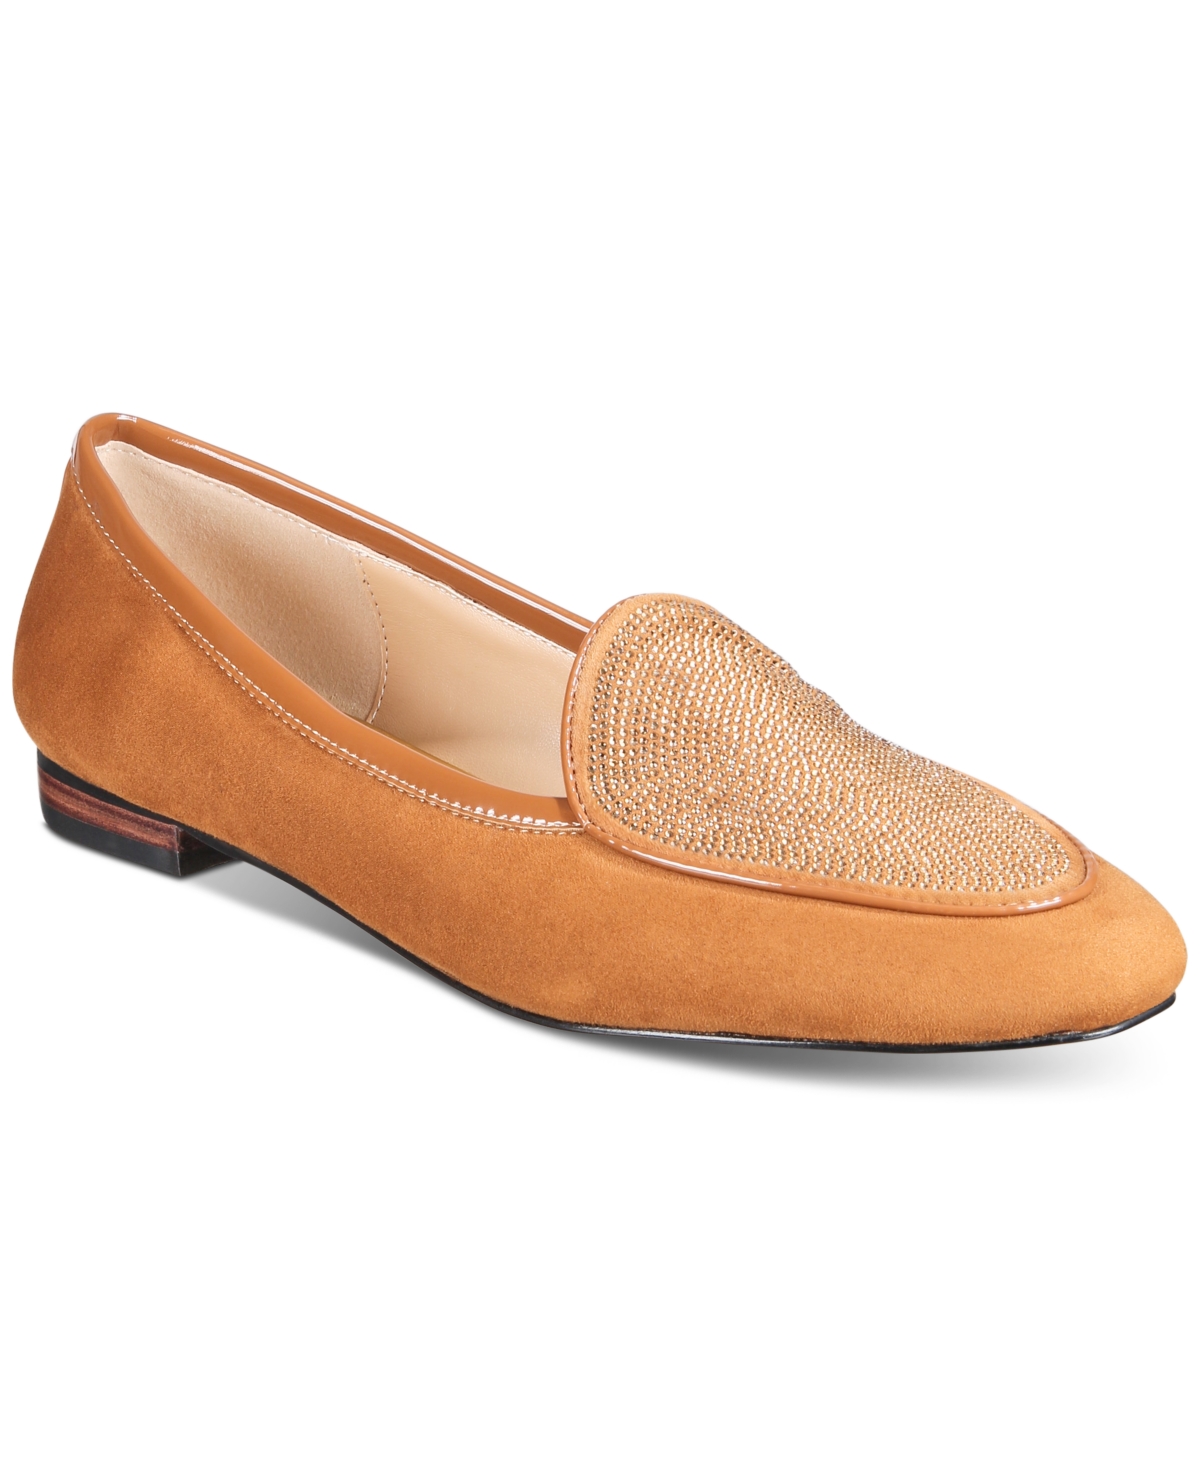 Women's Lonna Luxurious Slip-On Loafer Flats - Brown